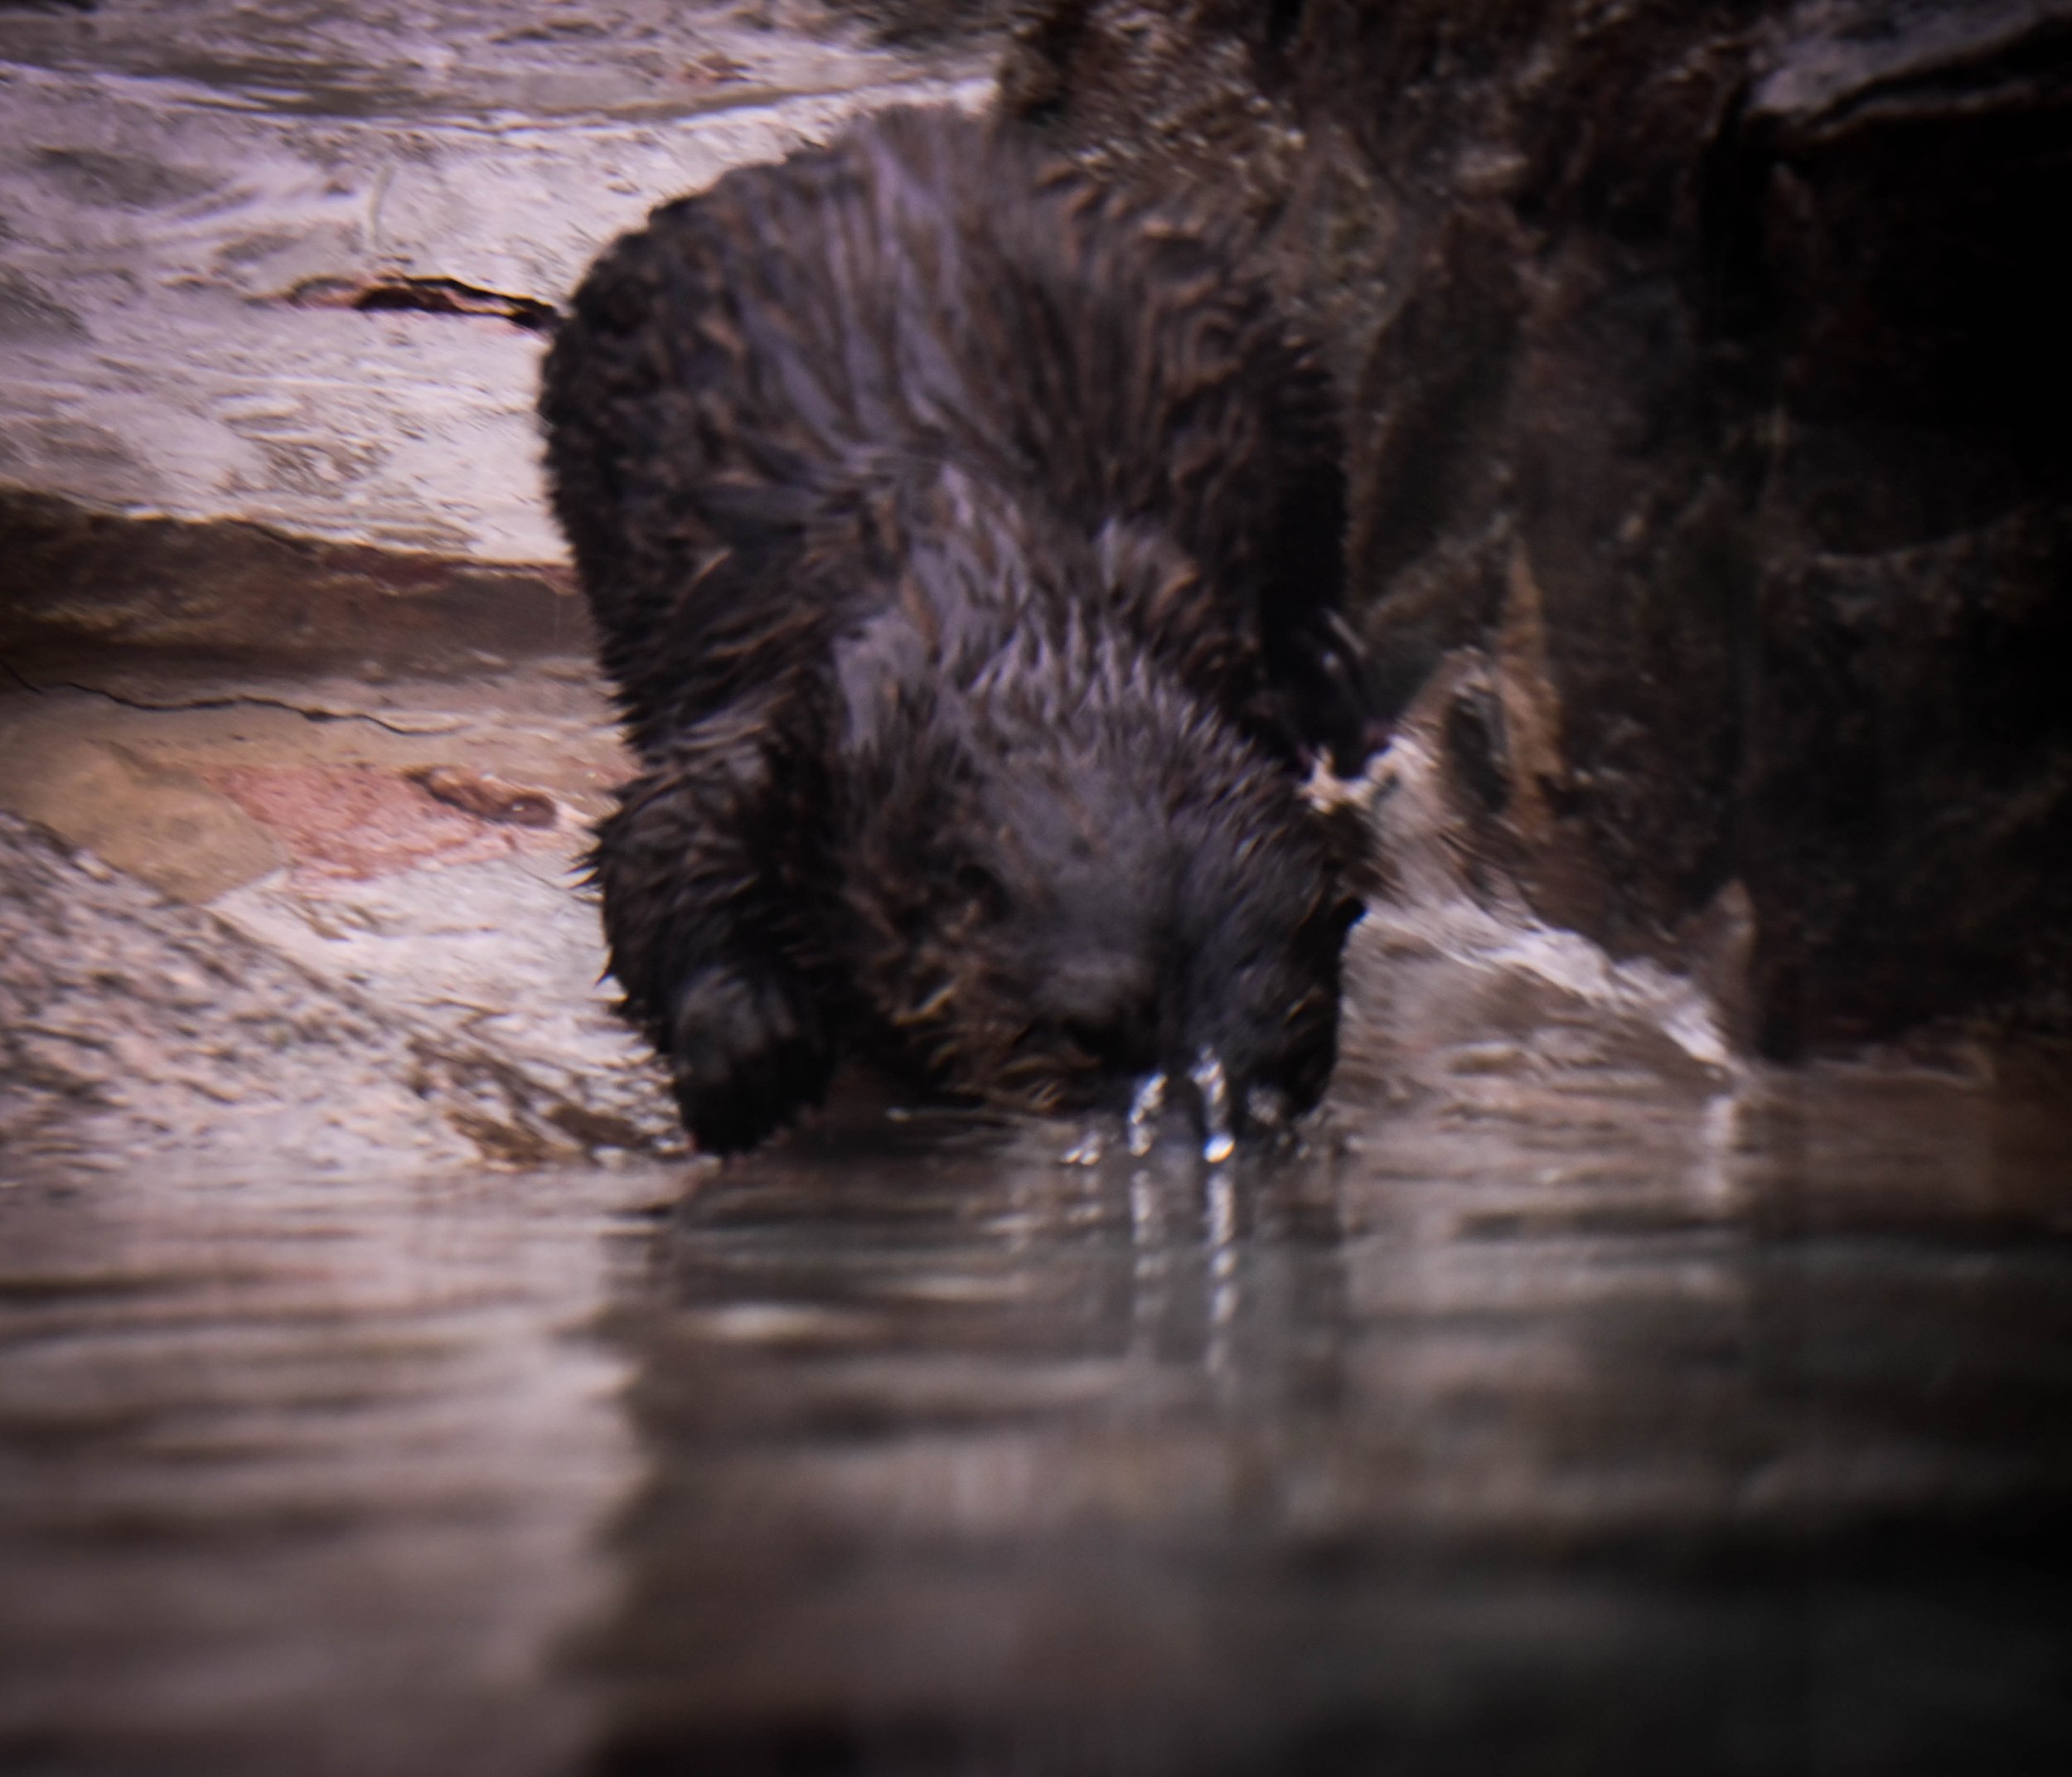  American River Otter at Western North Carolina Nature Center. 